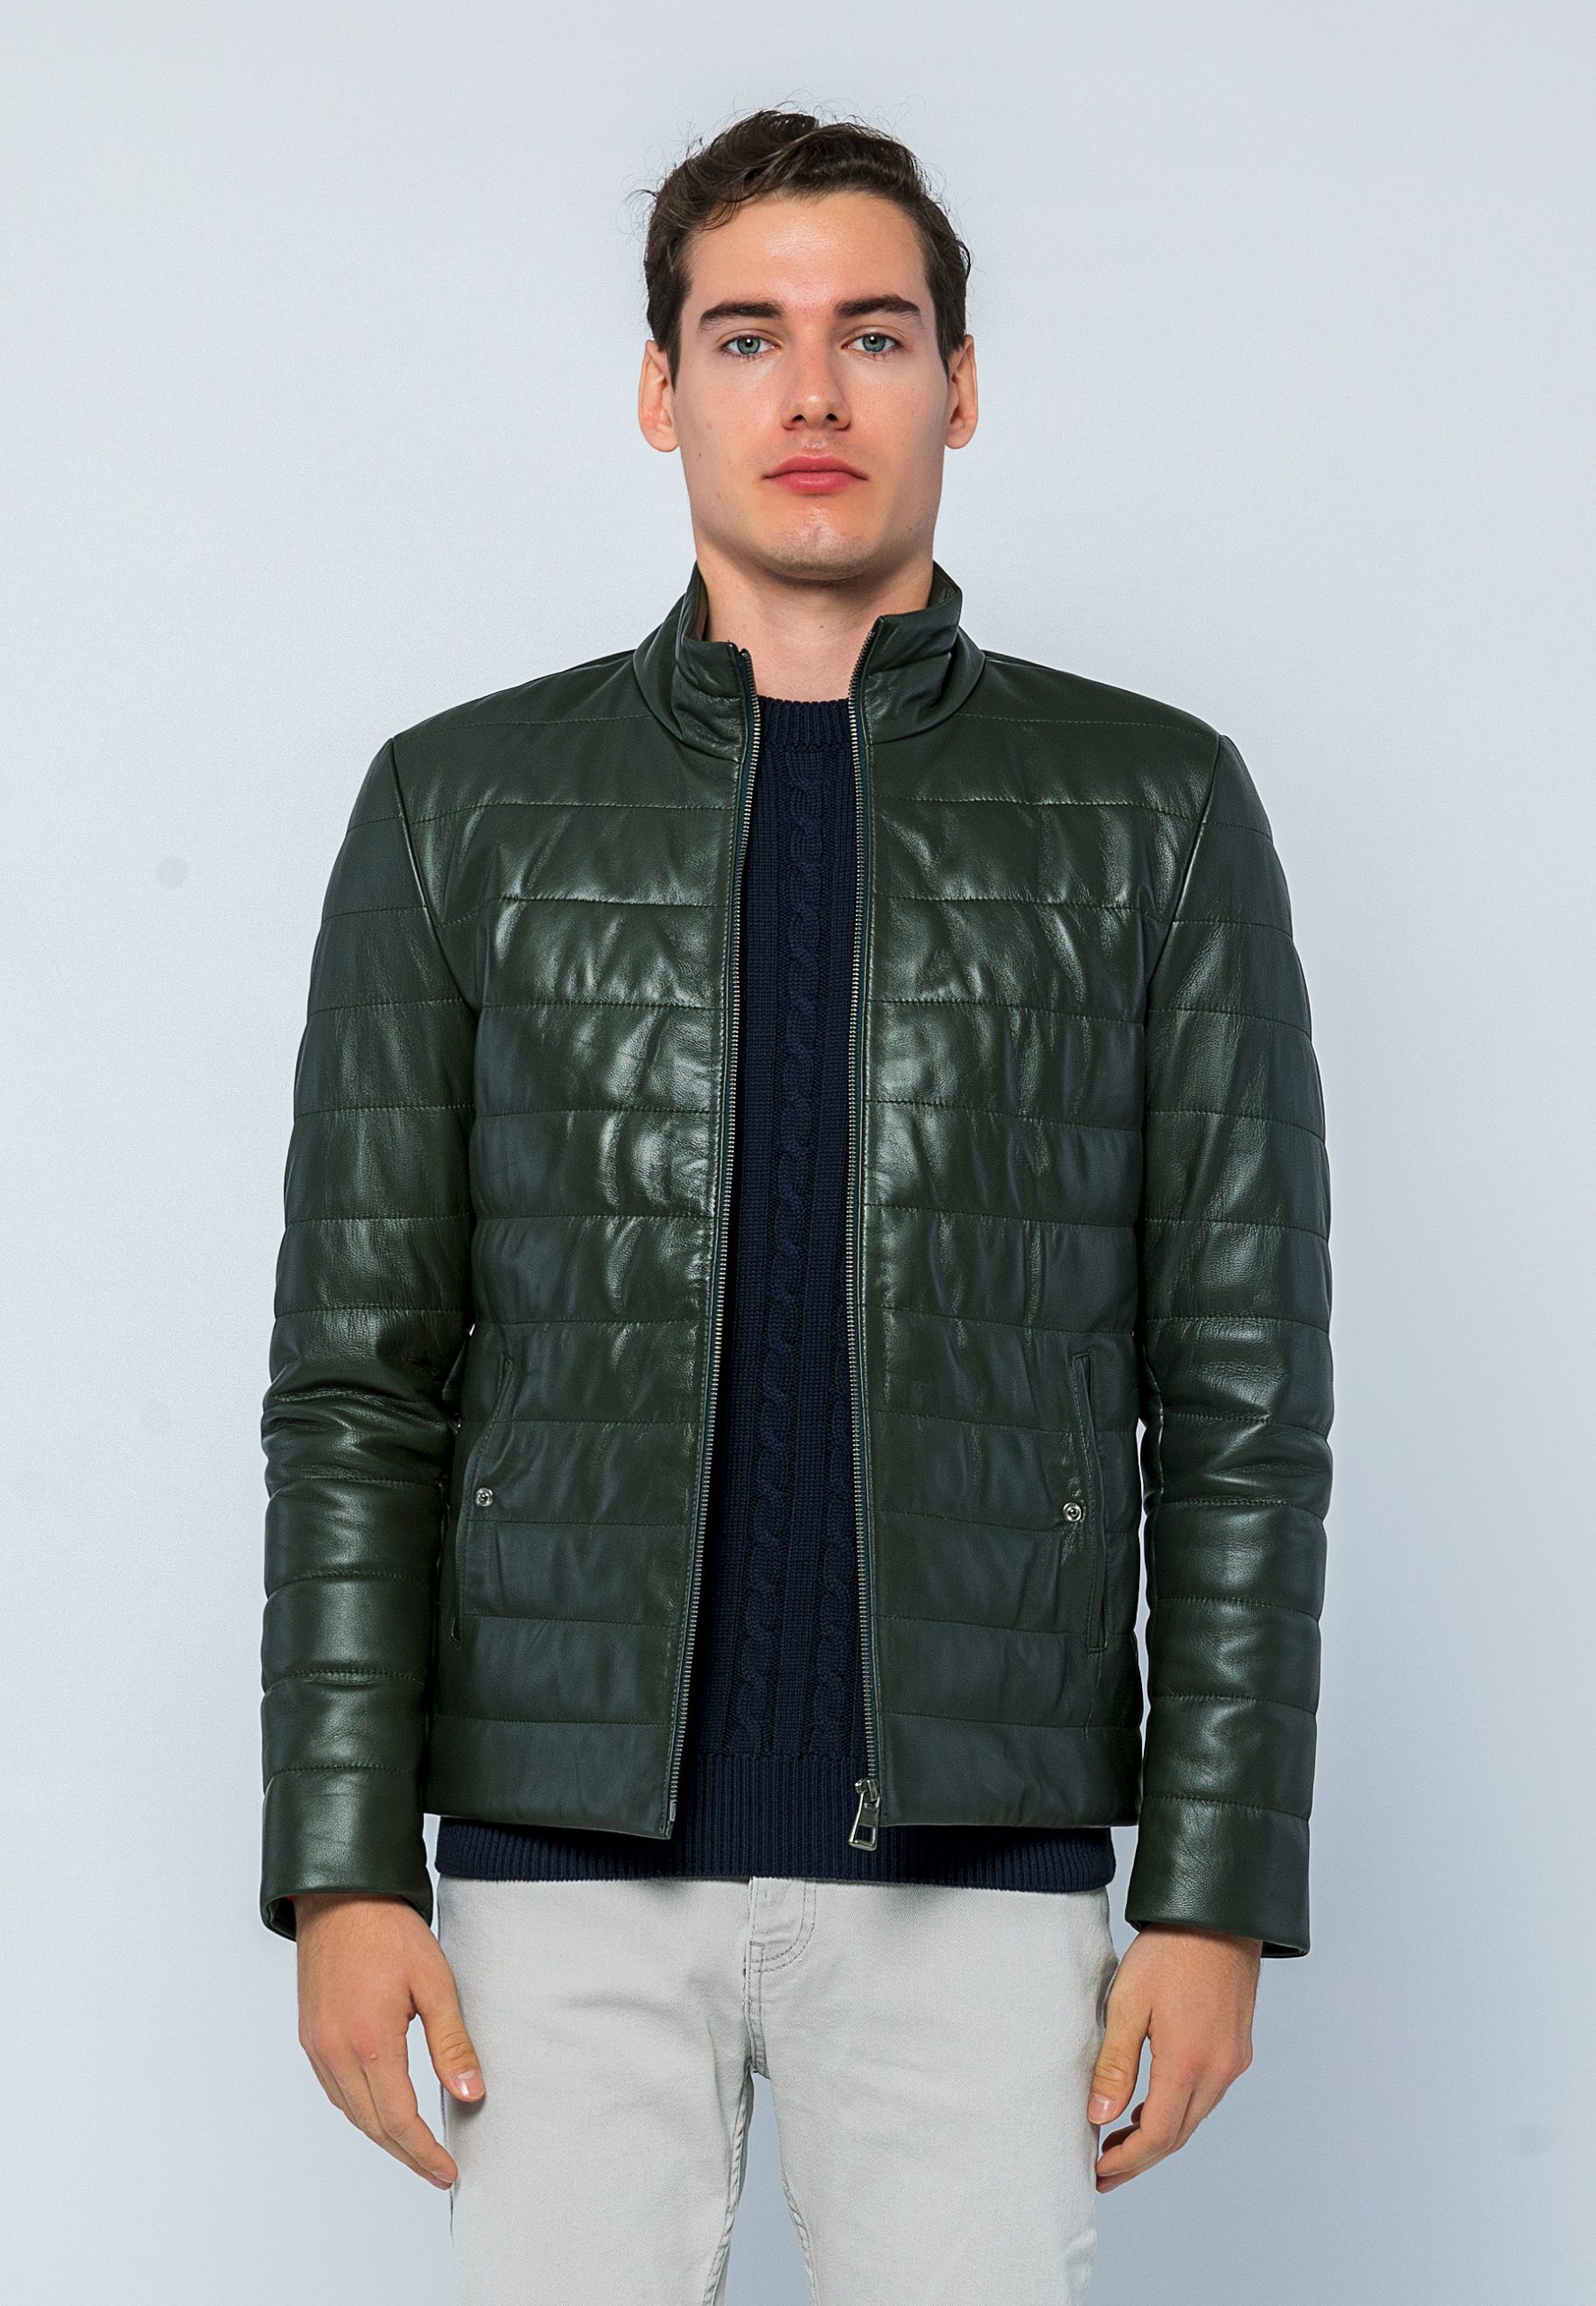 Basics&More Men's Dark Green Leather Jacket - Basics&More